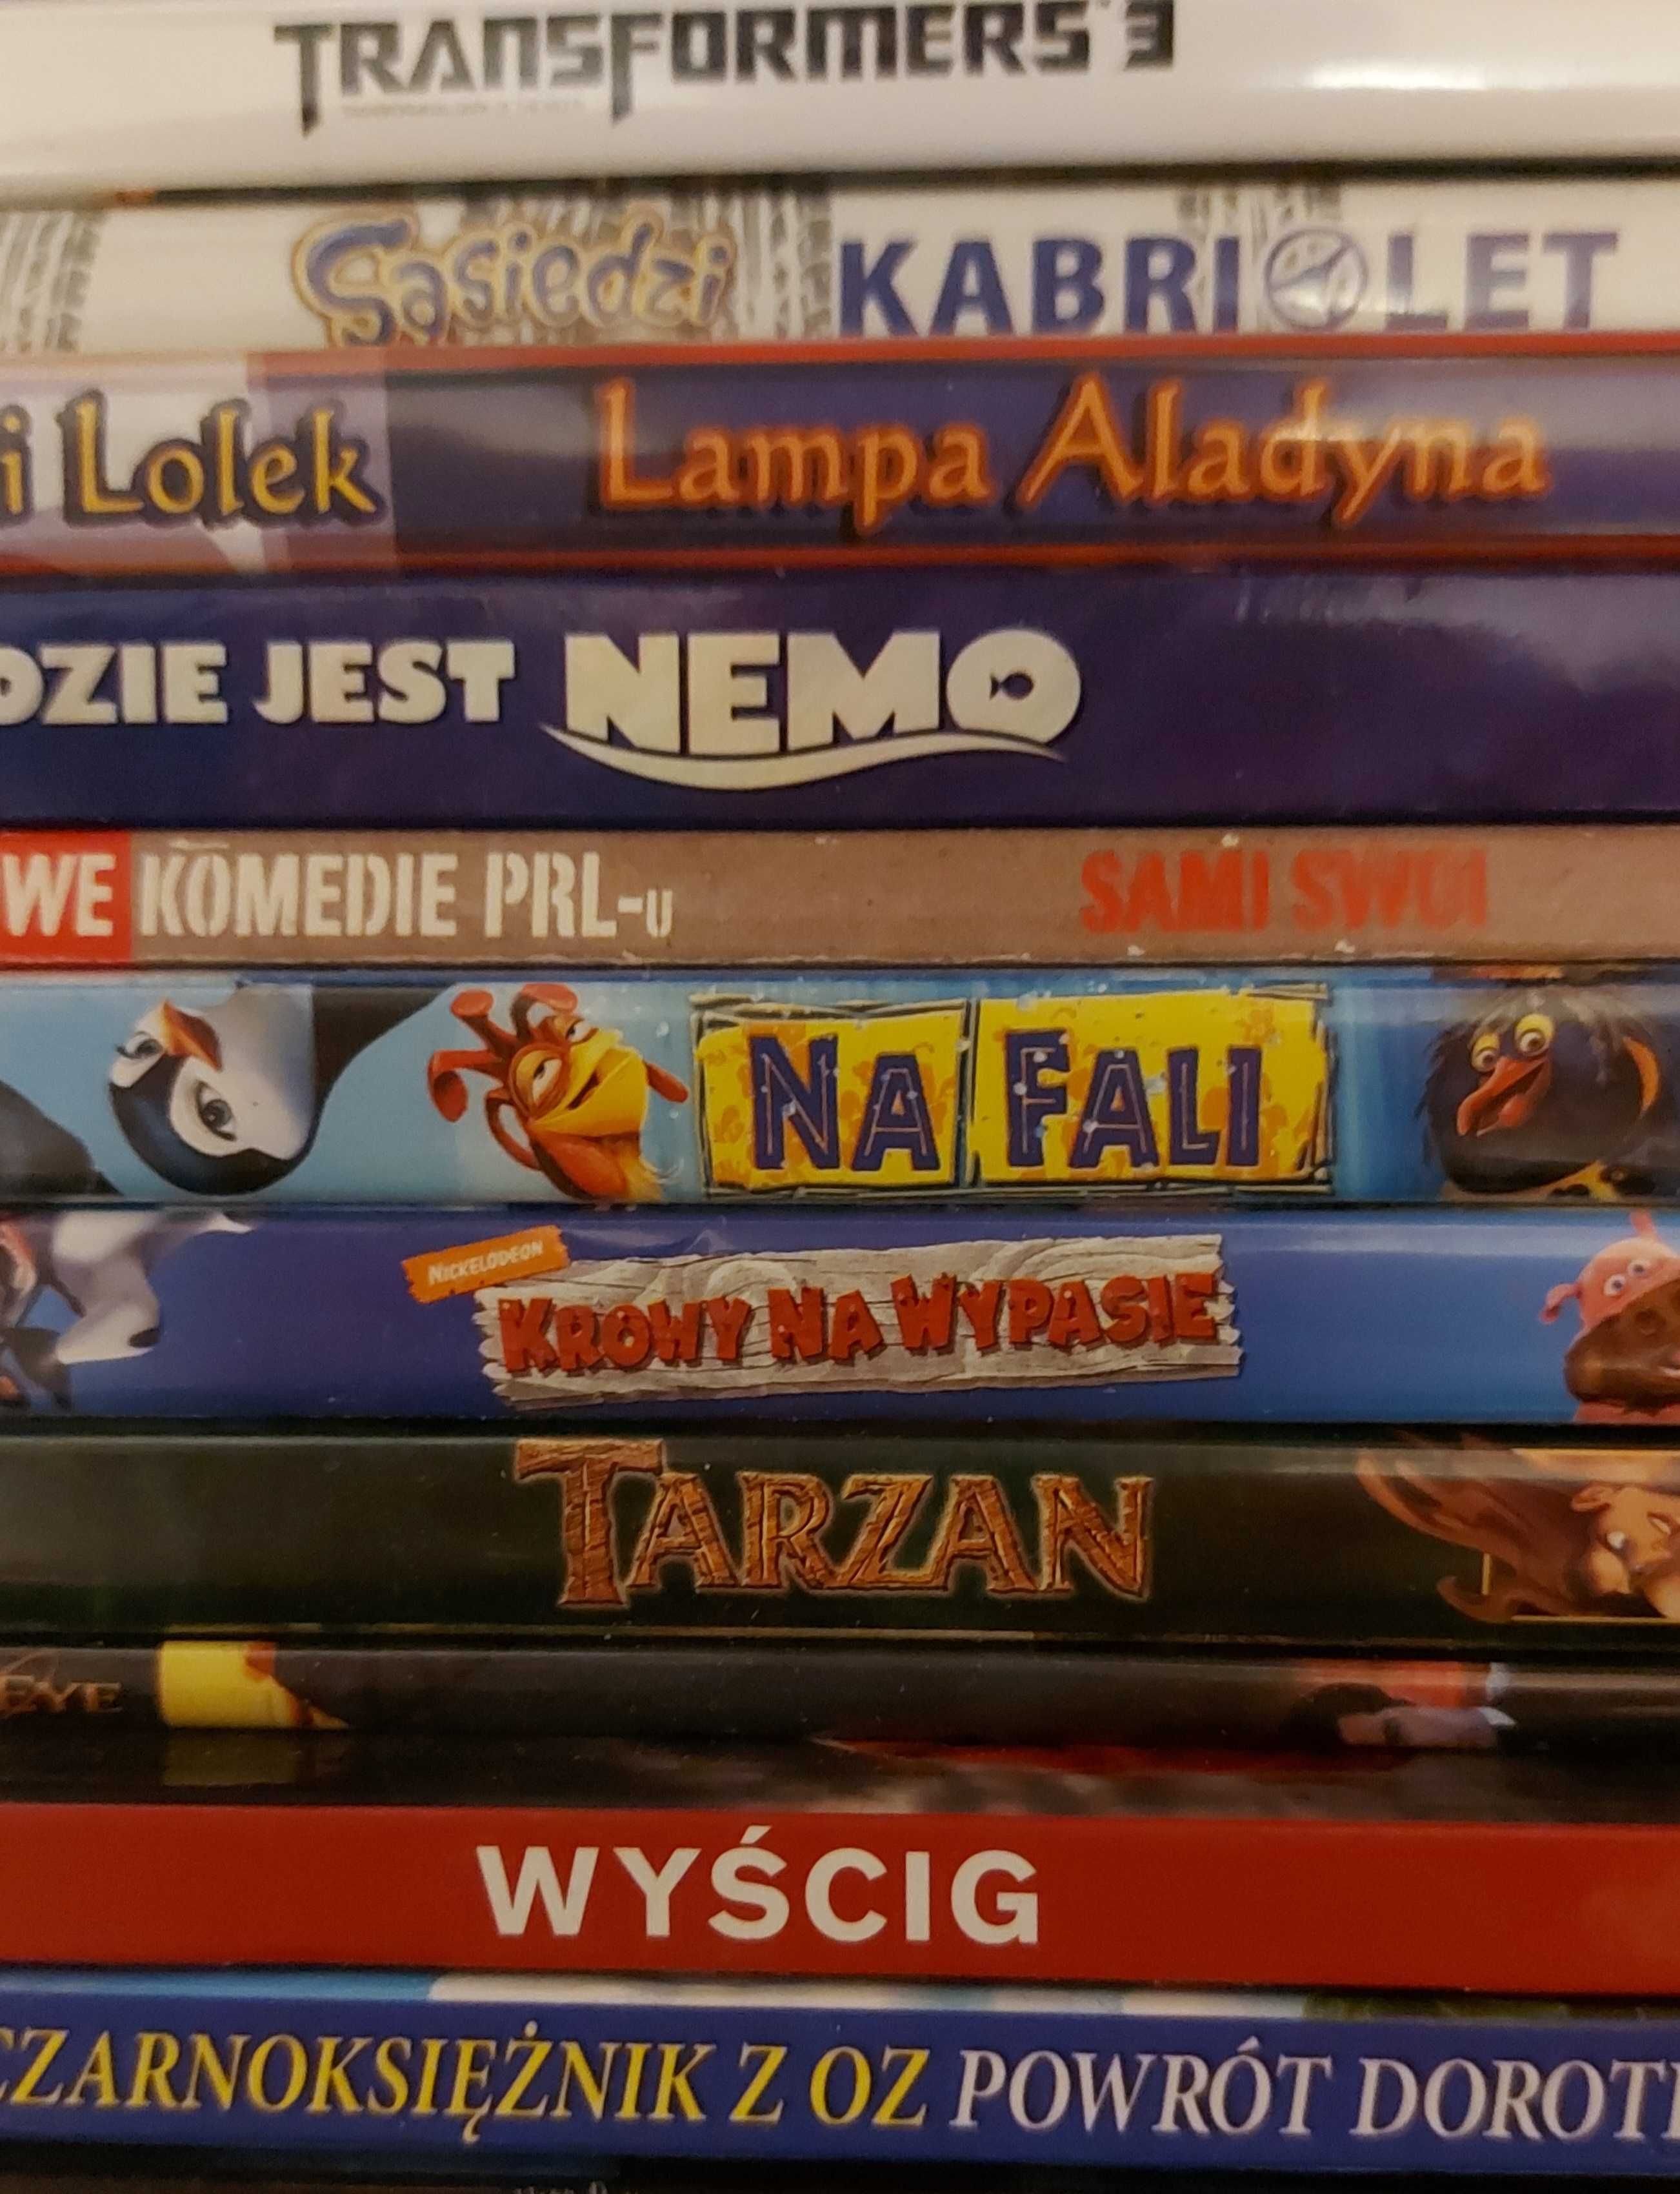 Bajki DVD, Auta, Shrek, Panda, Alvin, Asterix